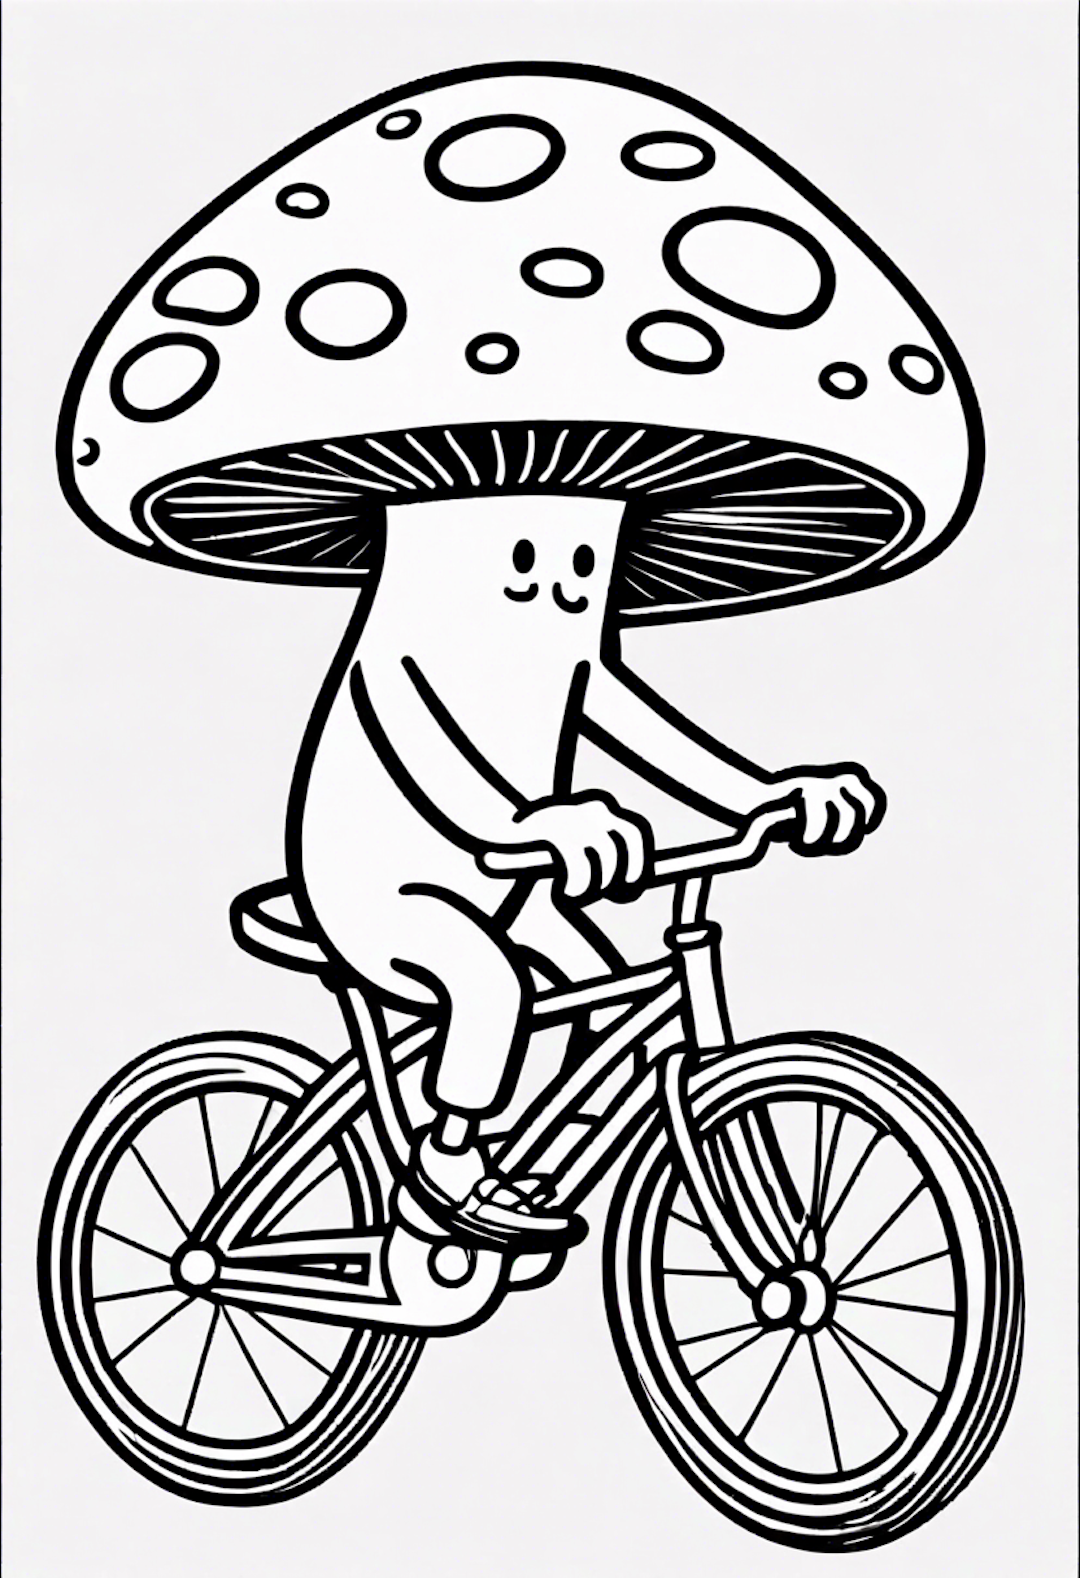 A Cartoon Mushroom Riding A Bicycle